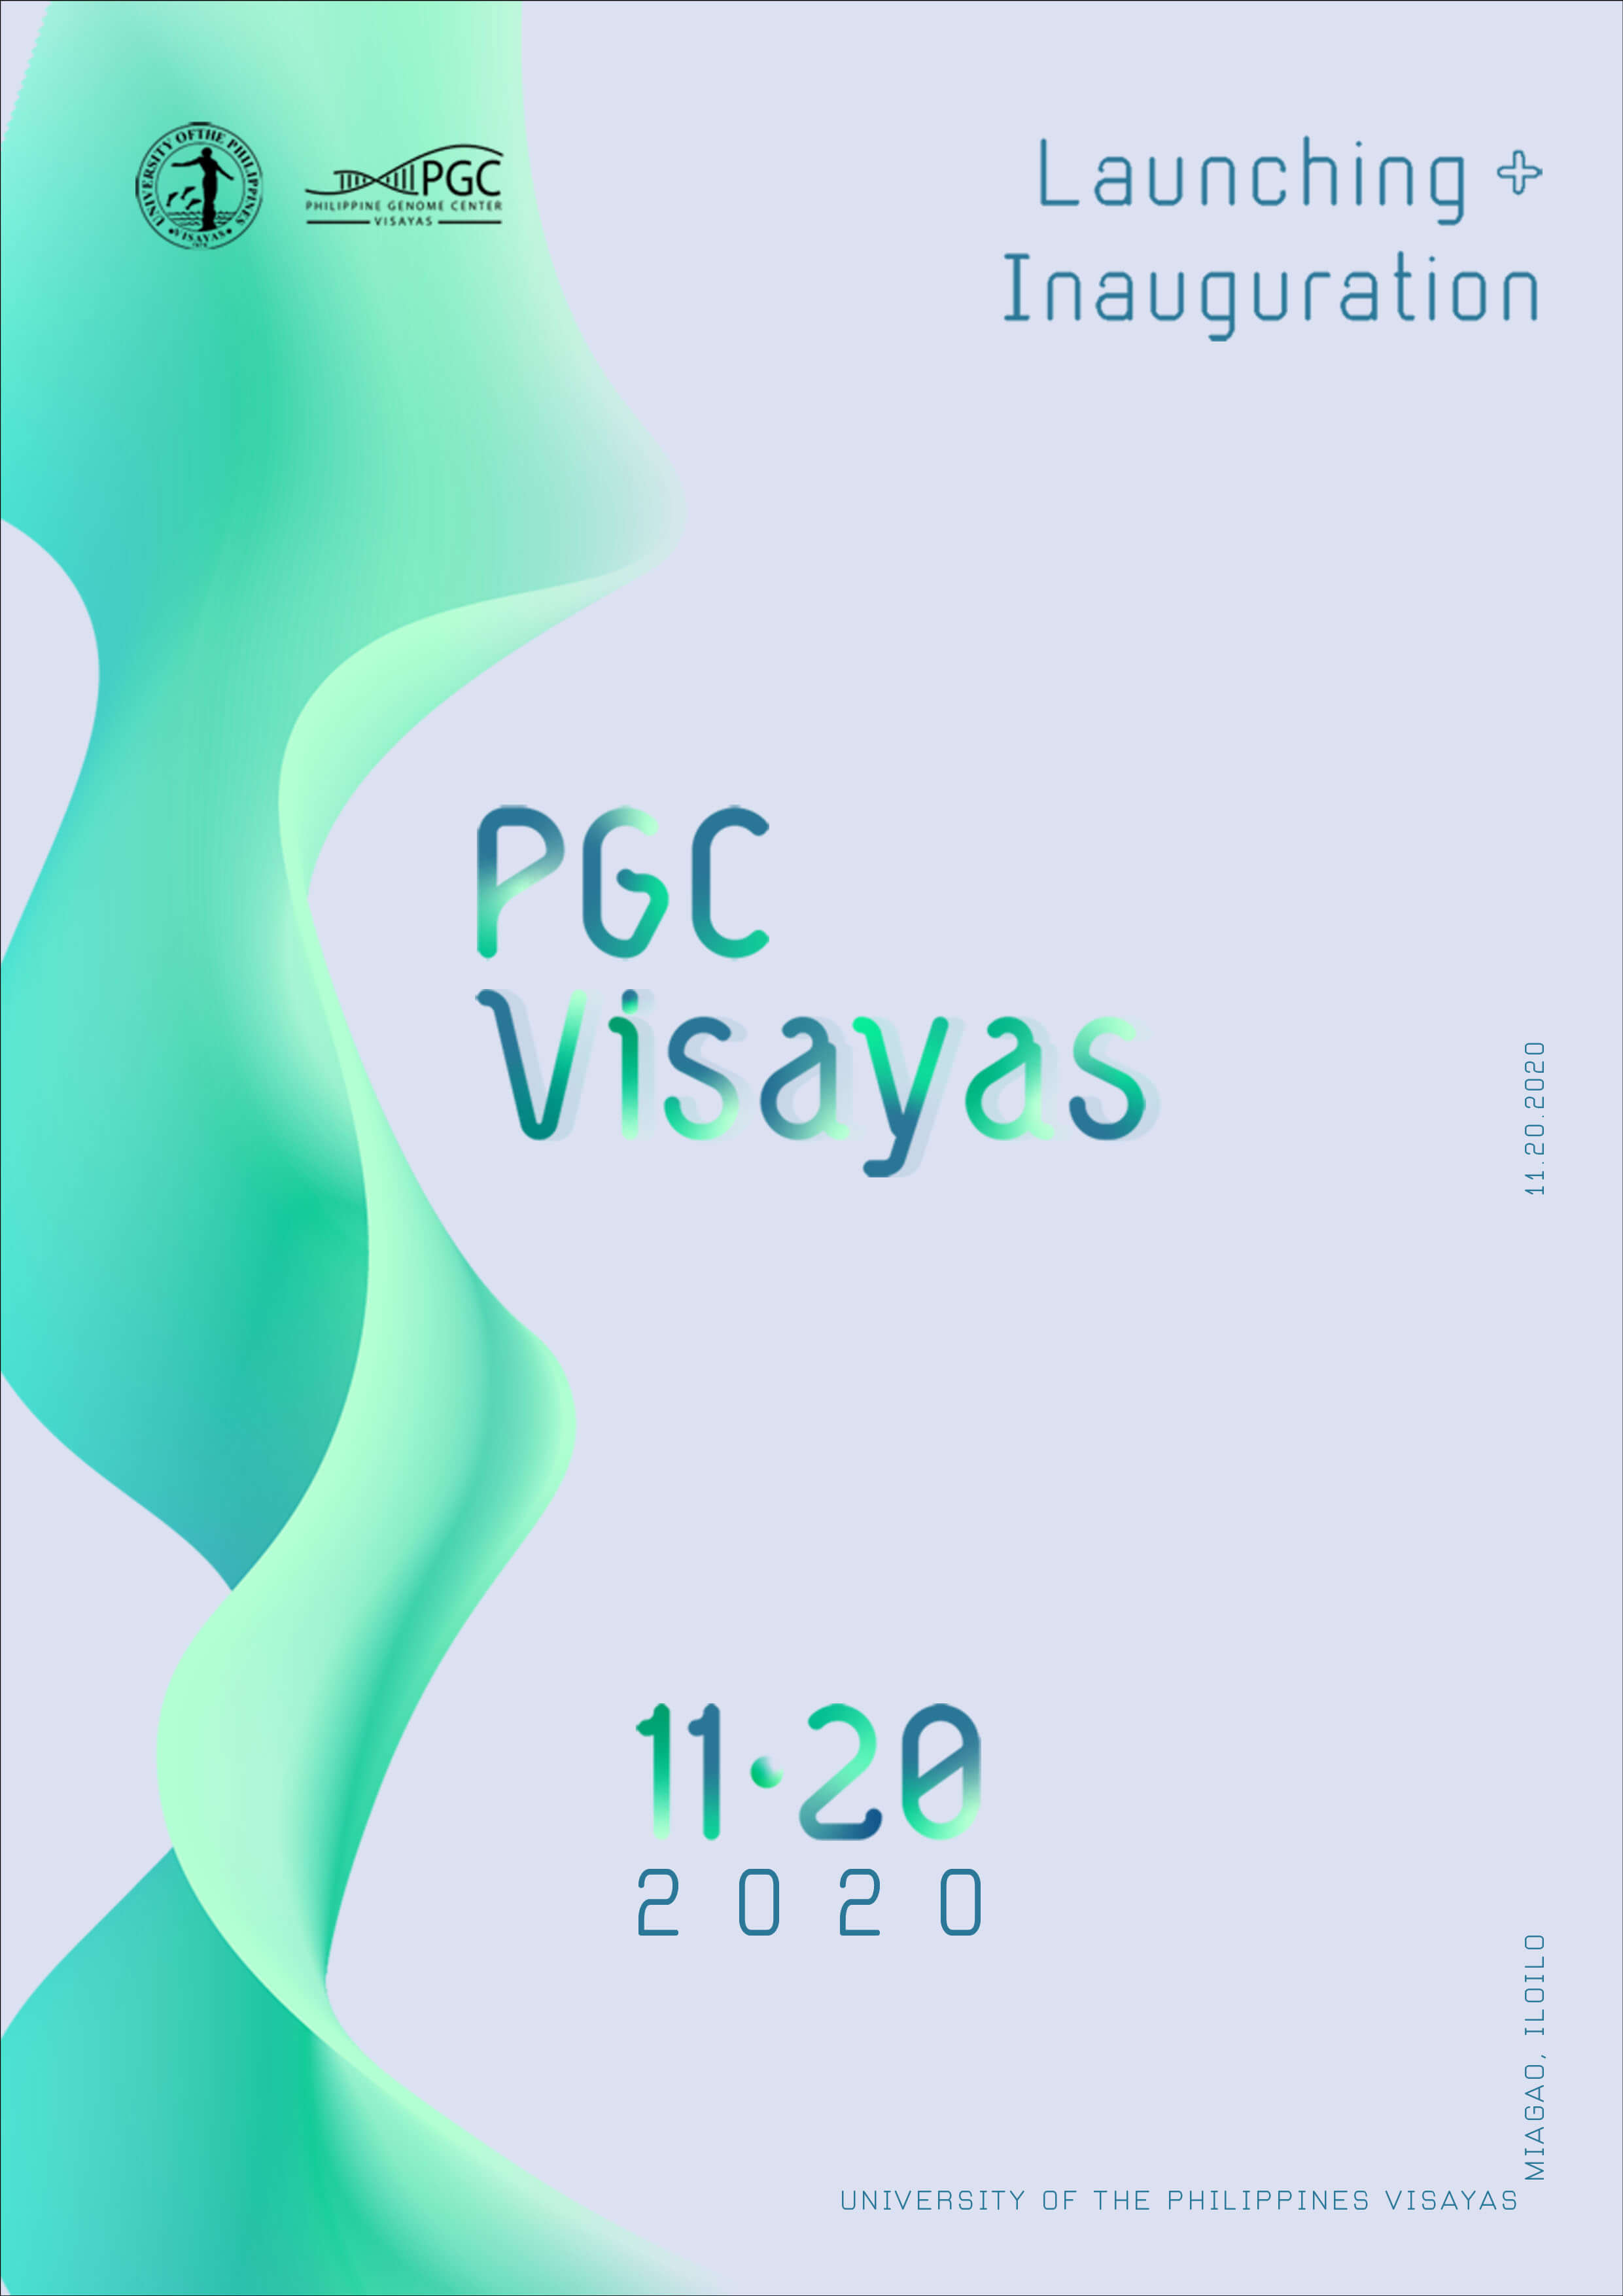 UPV to launch PGC Visayas